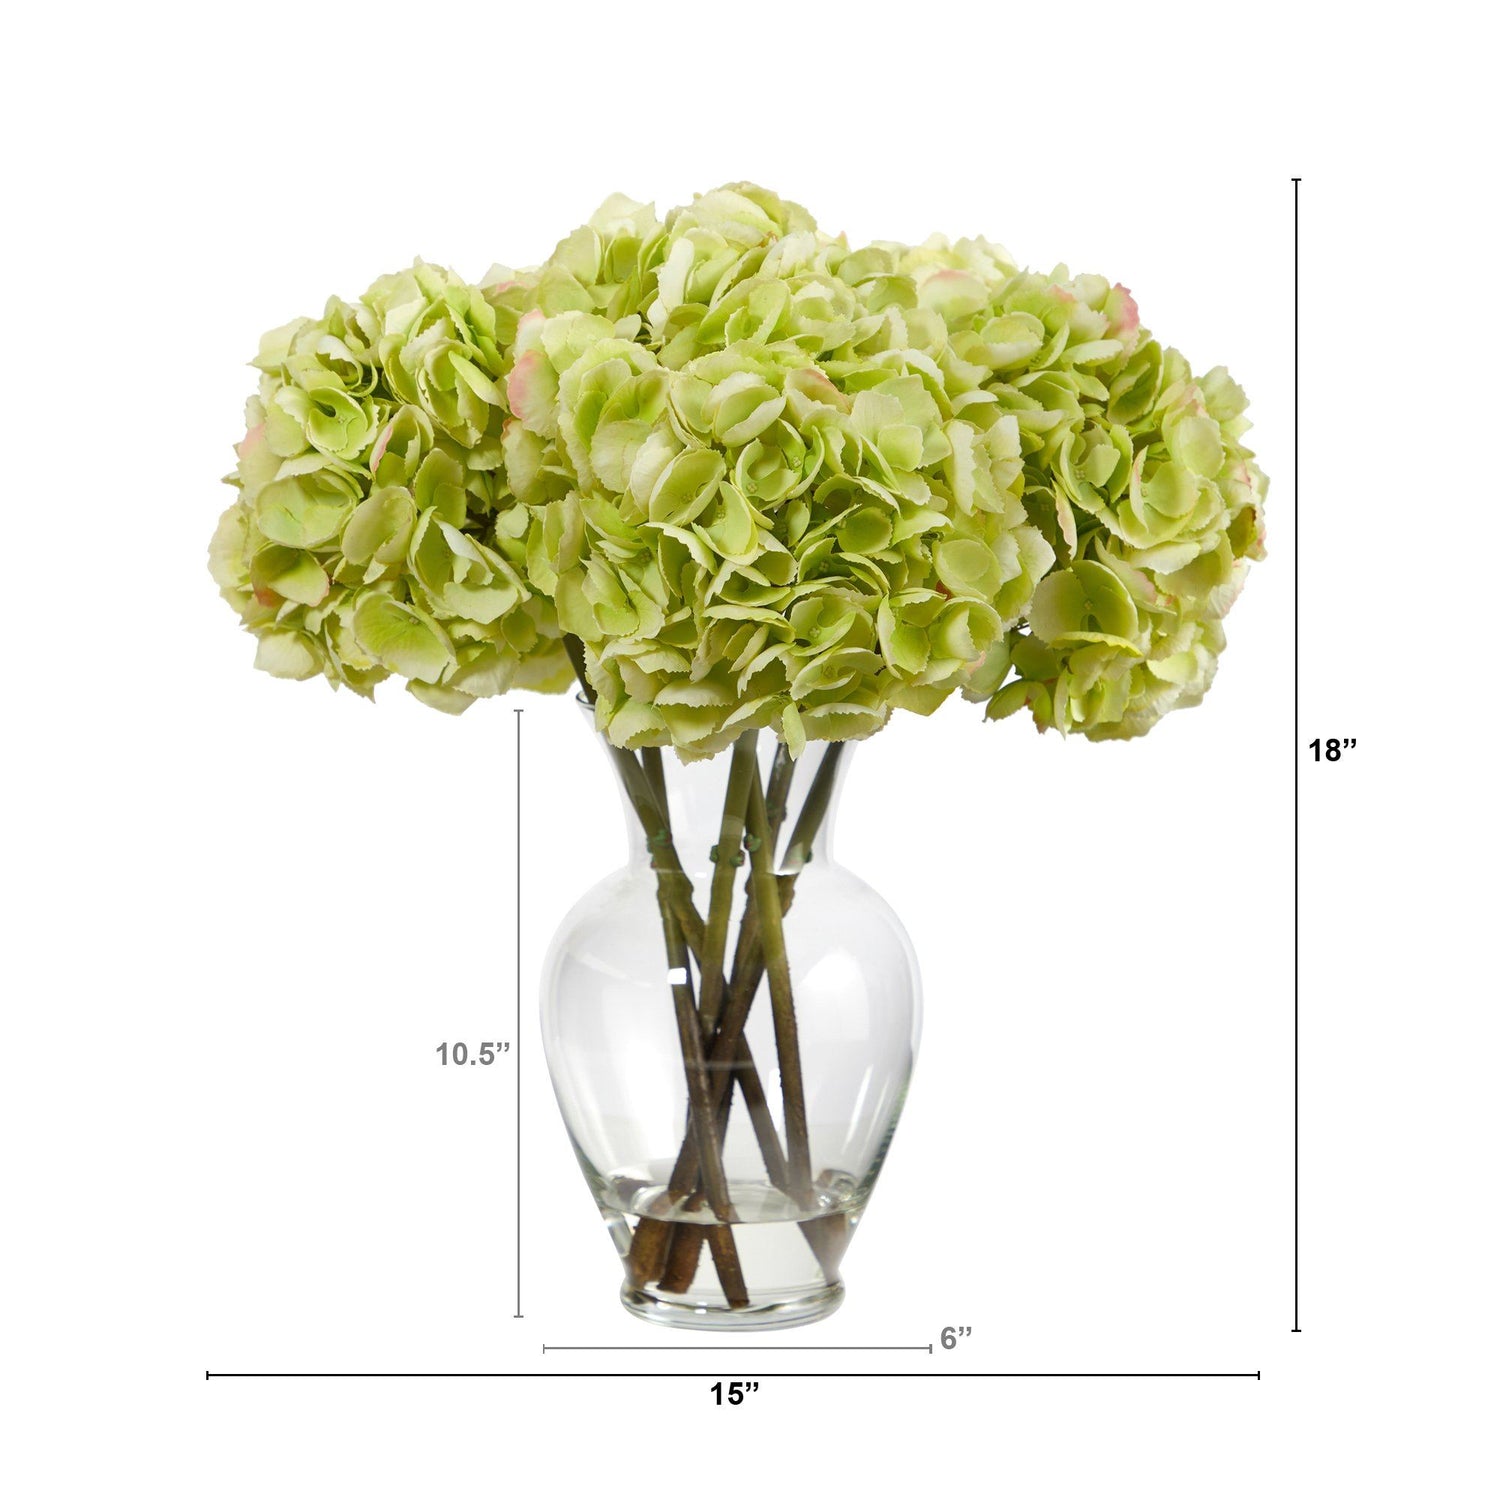 18” Yellow Hydrangea Artificial Arrangement in a Bouquet Glass Vase